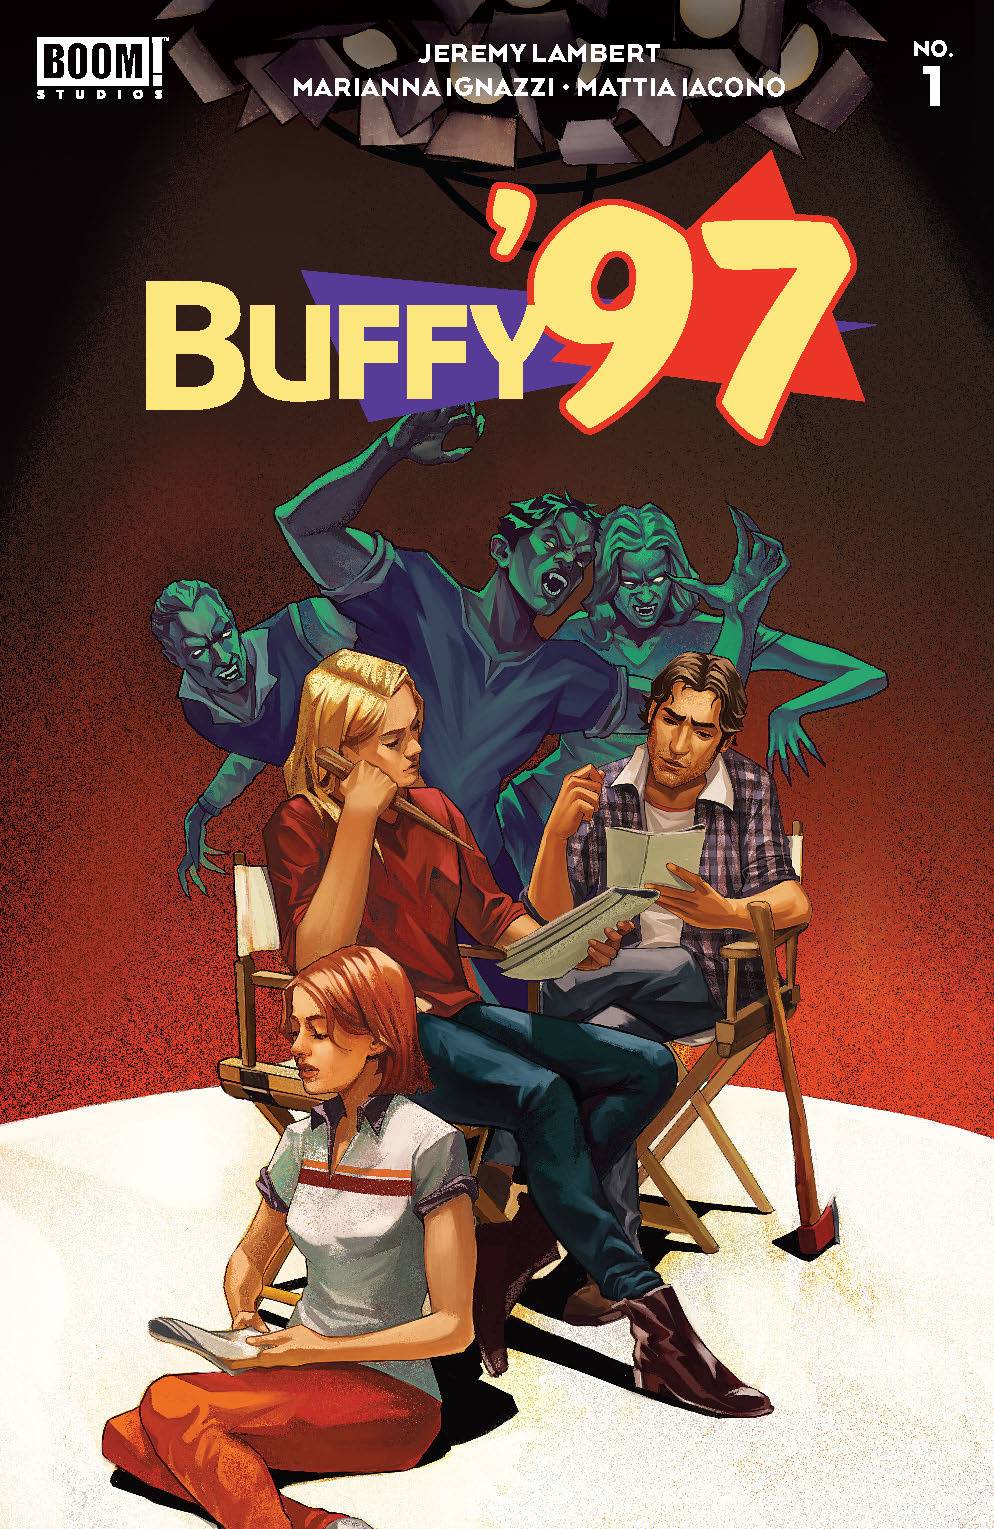 Buffy 97 no. 1 (2022 Series)